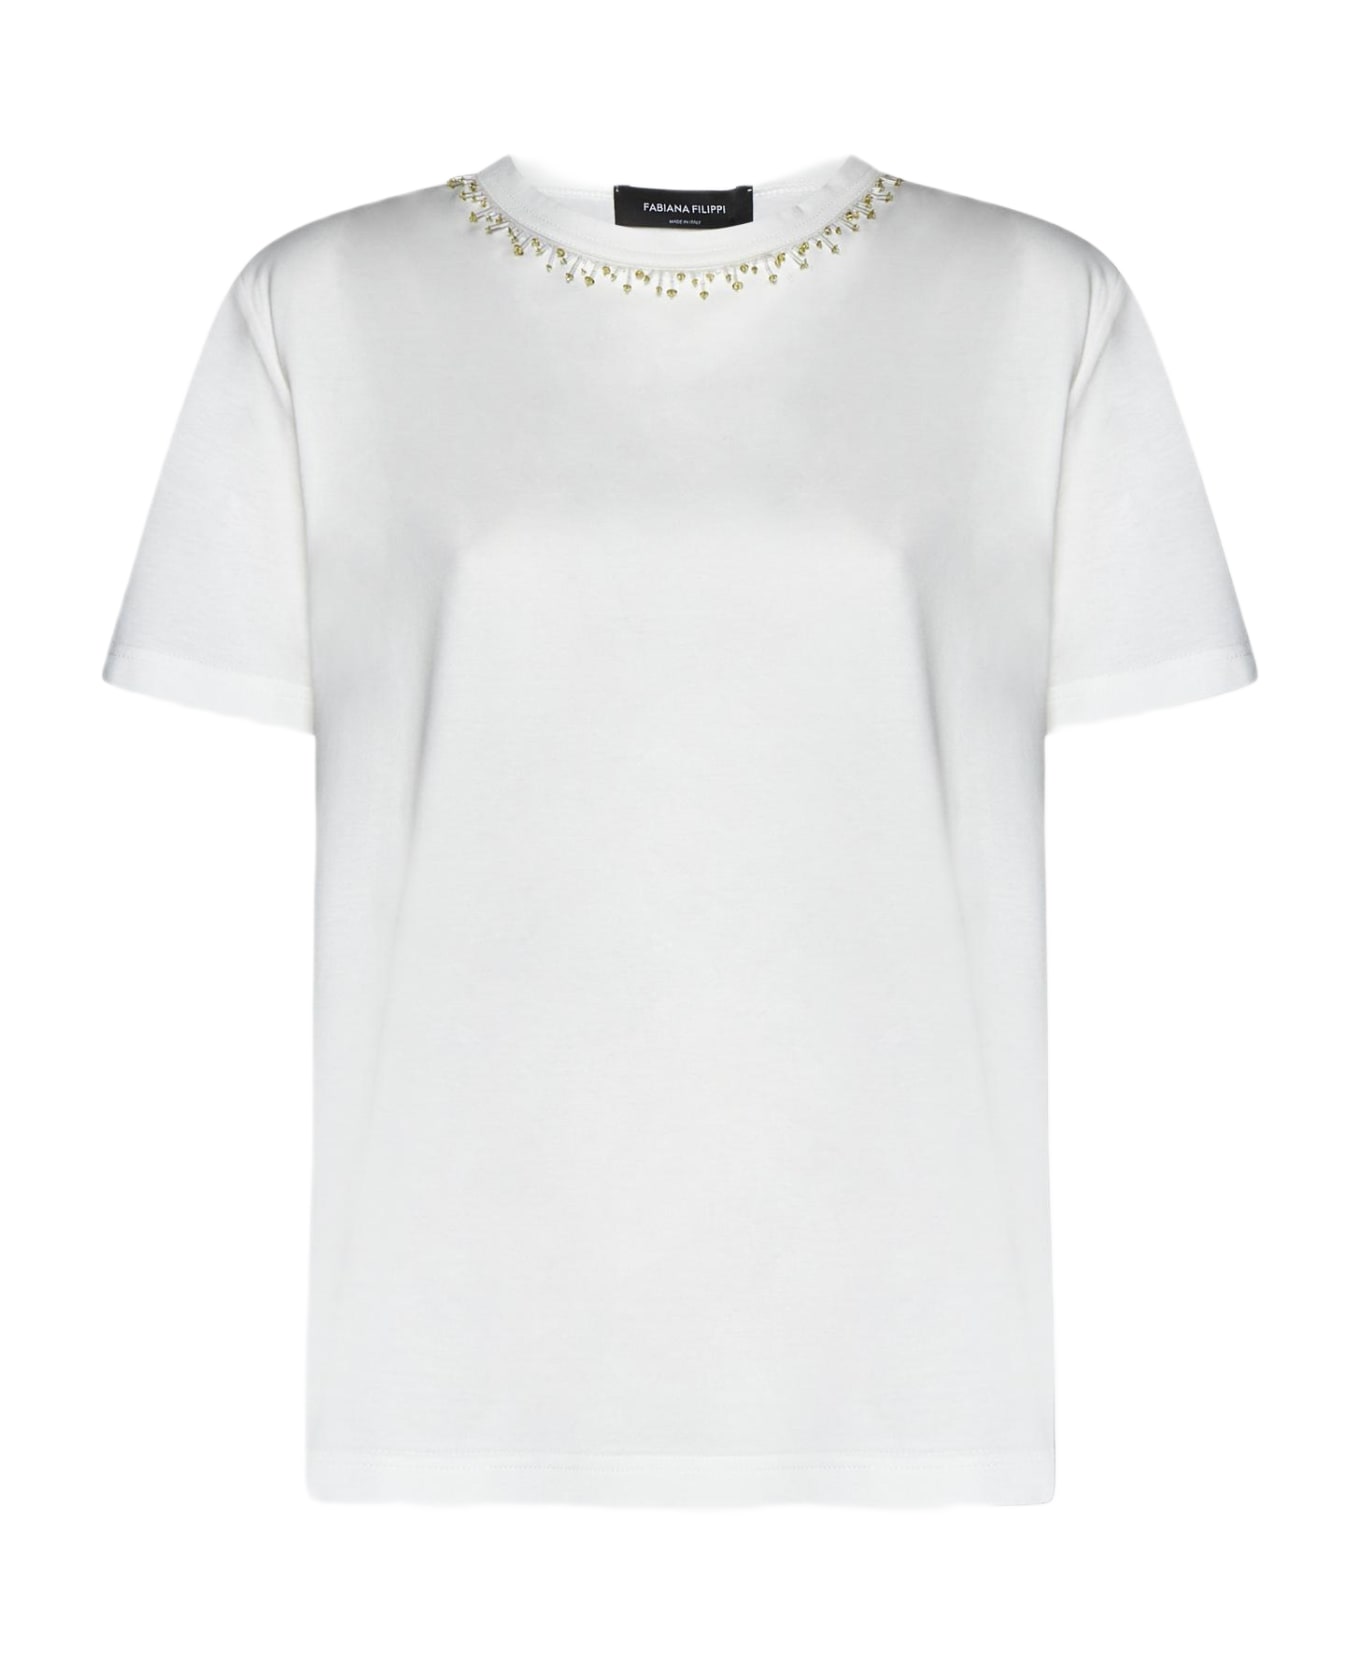 Fabiana Filippi Rhinestone Cotton T-shirt - Bianco